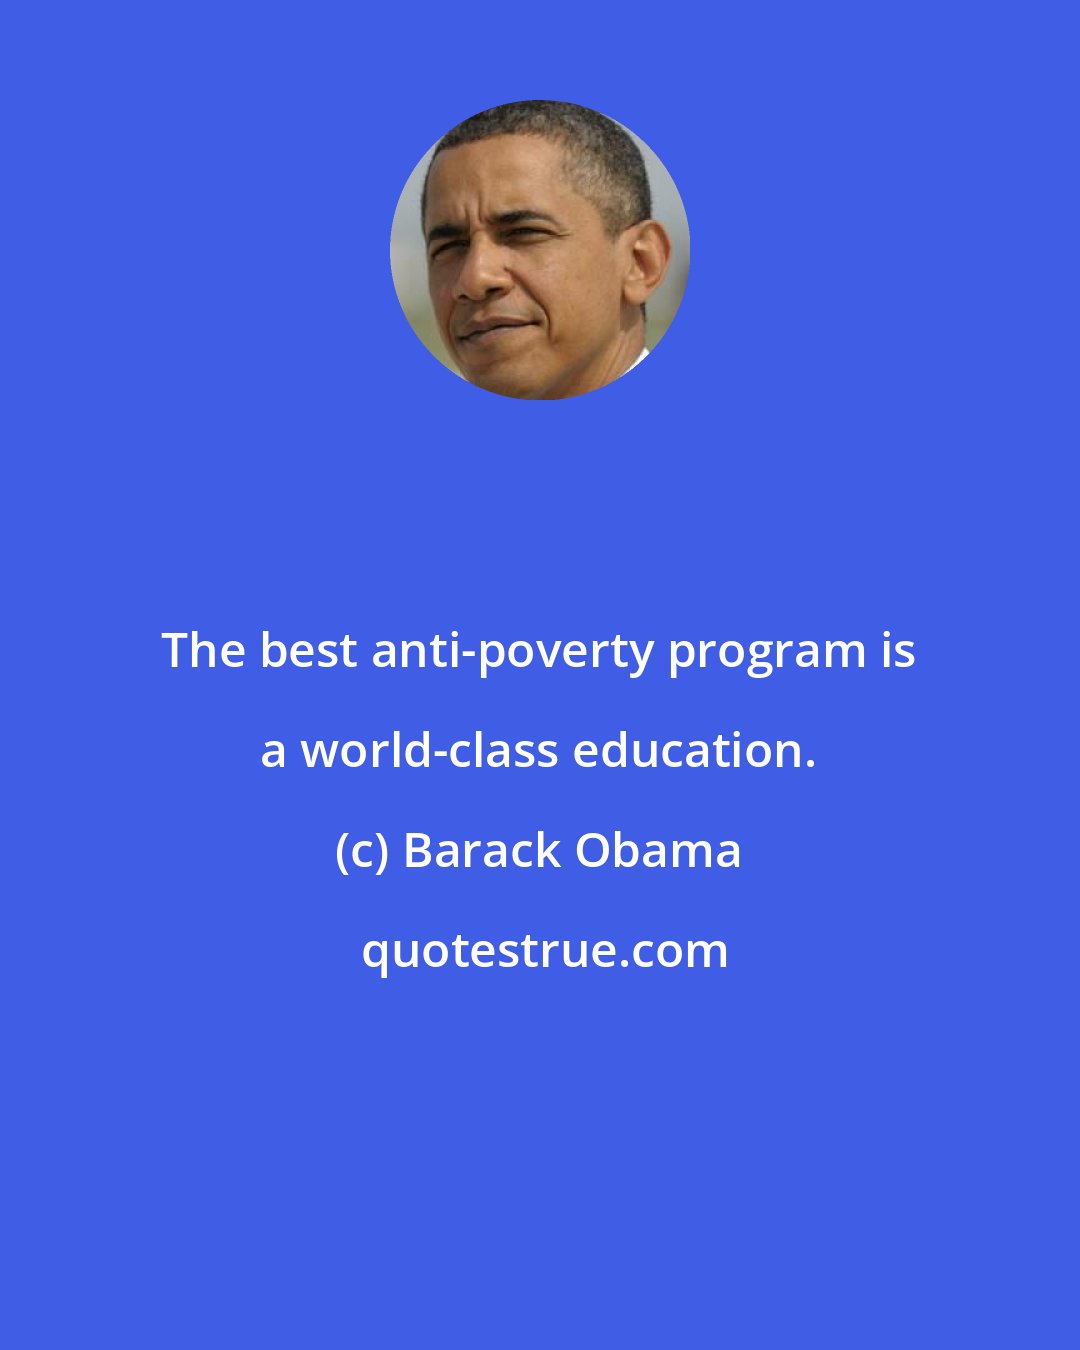 Barack Obama: The best anti-poverty program is a world-class education.